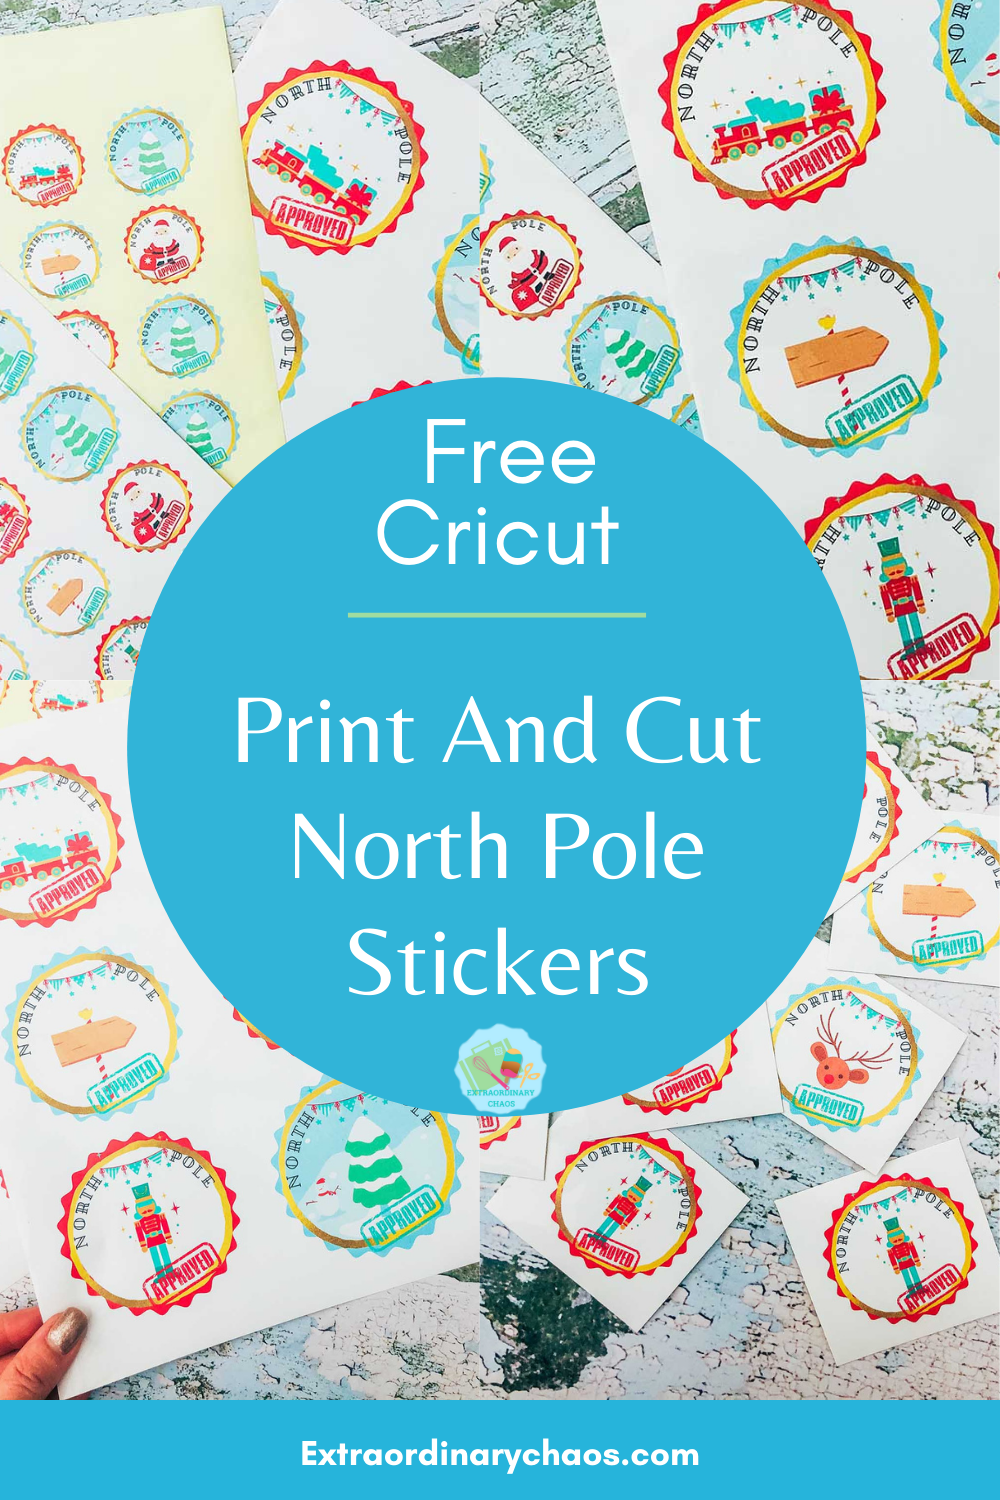 Free Cricut Print and cut North Pole Stickers